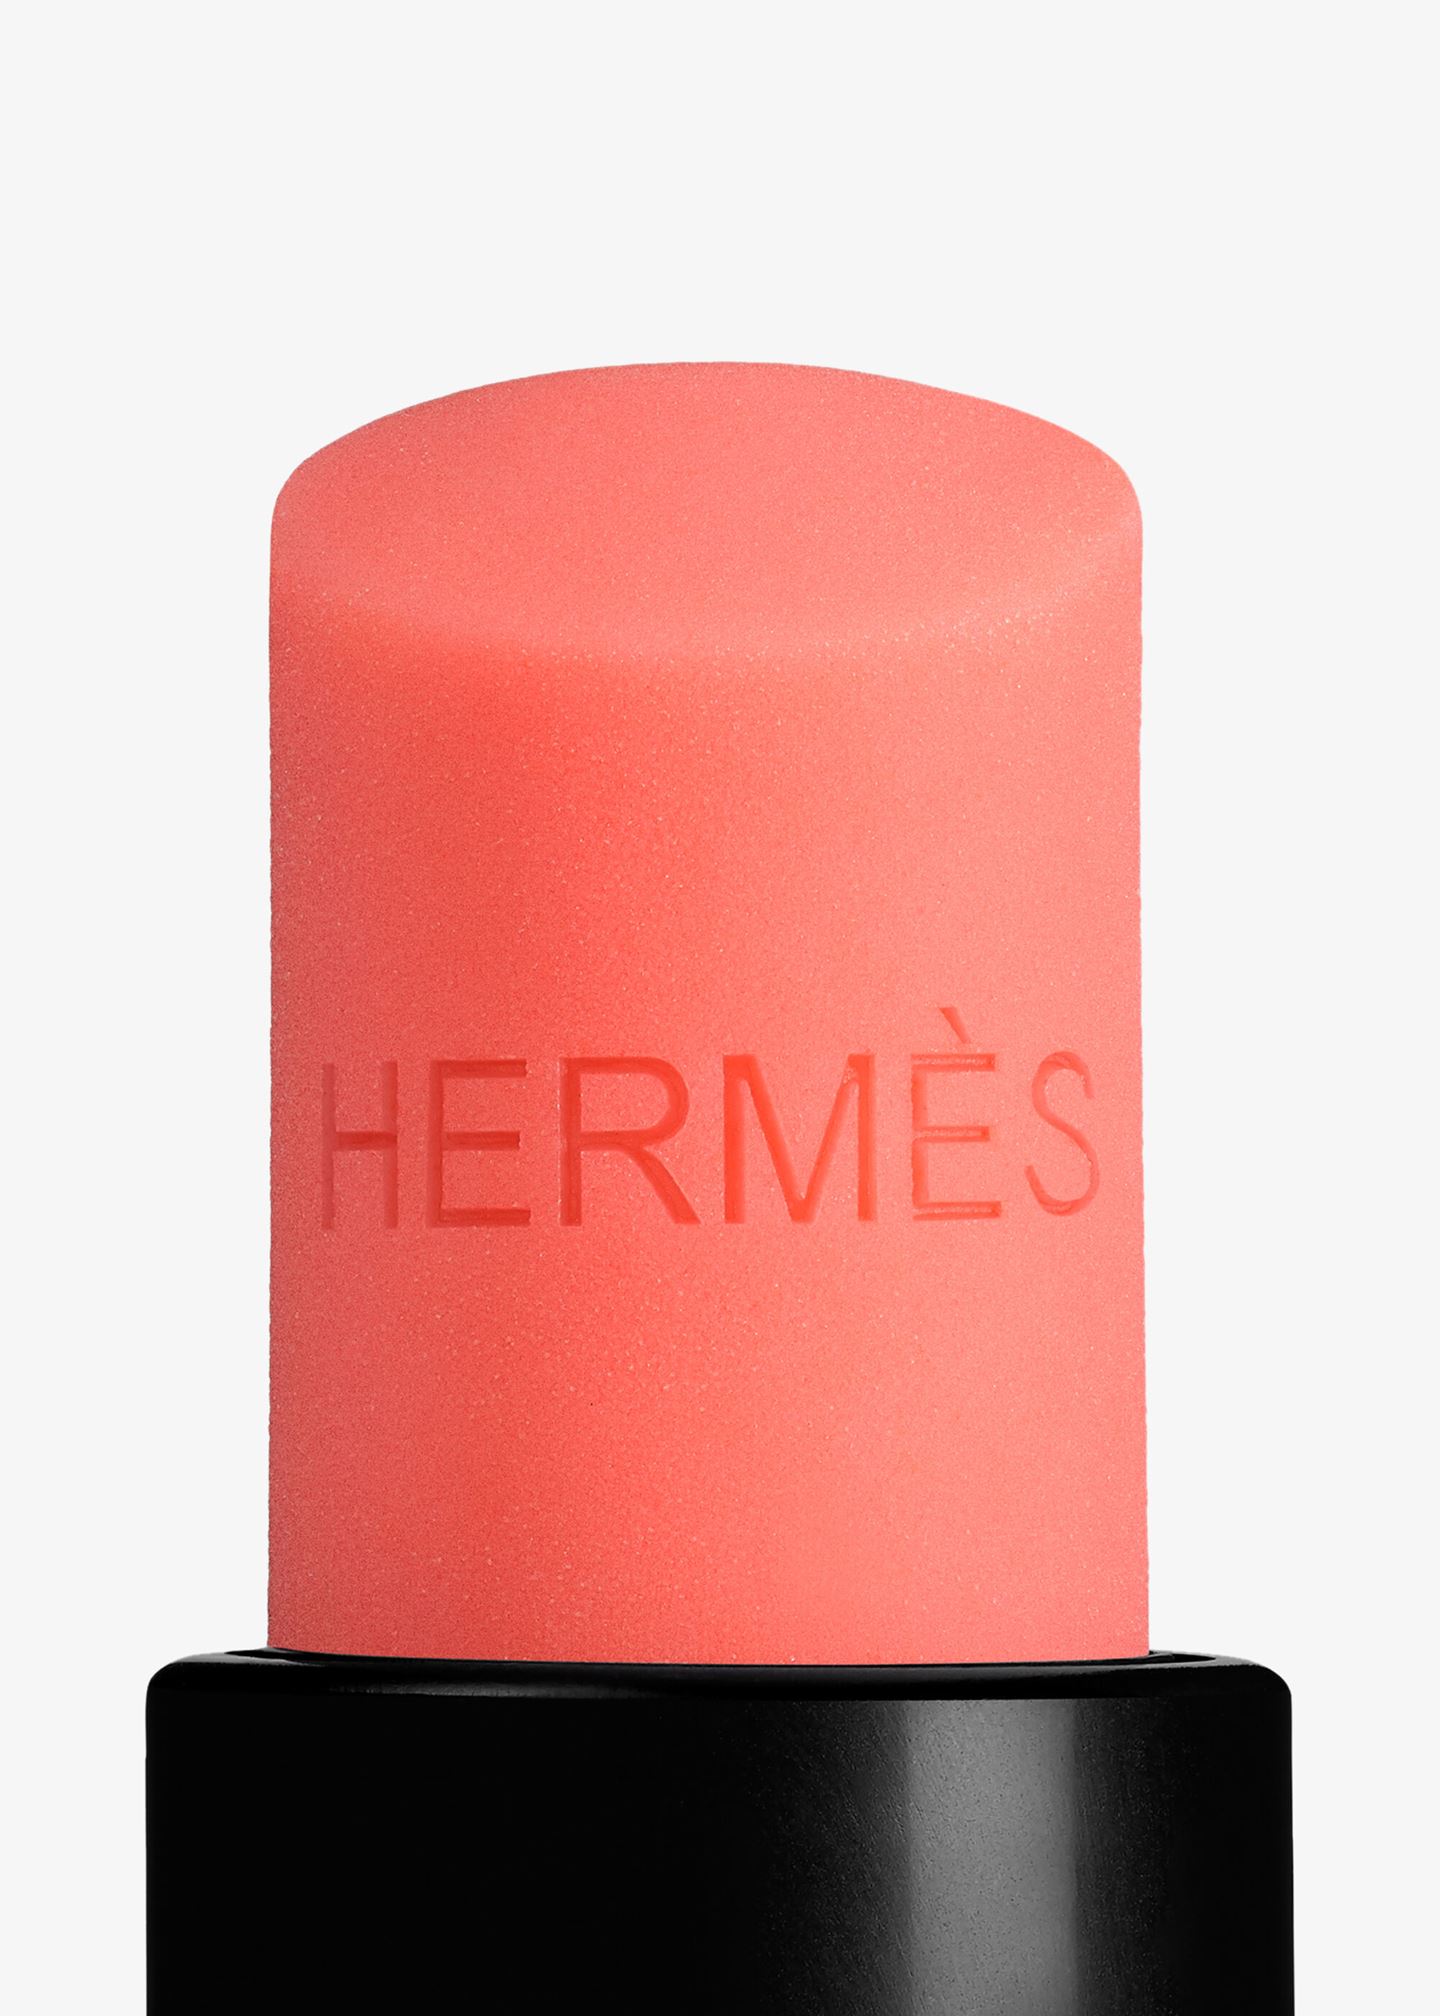 Lippenpflege «Rose Hermès Nachfüllstift Rosy Lip Perfector»